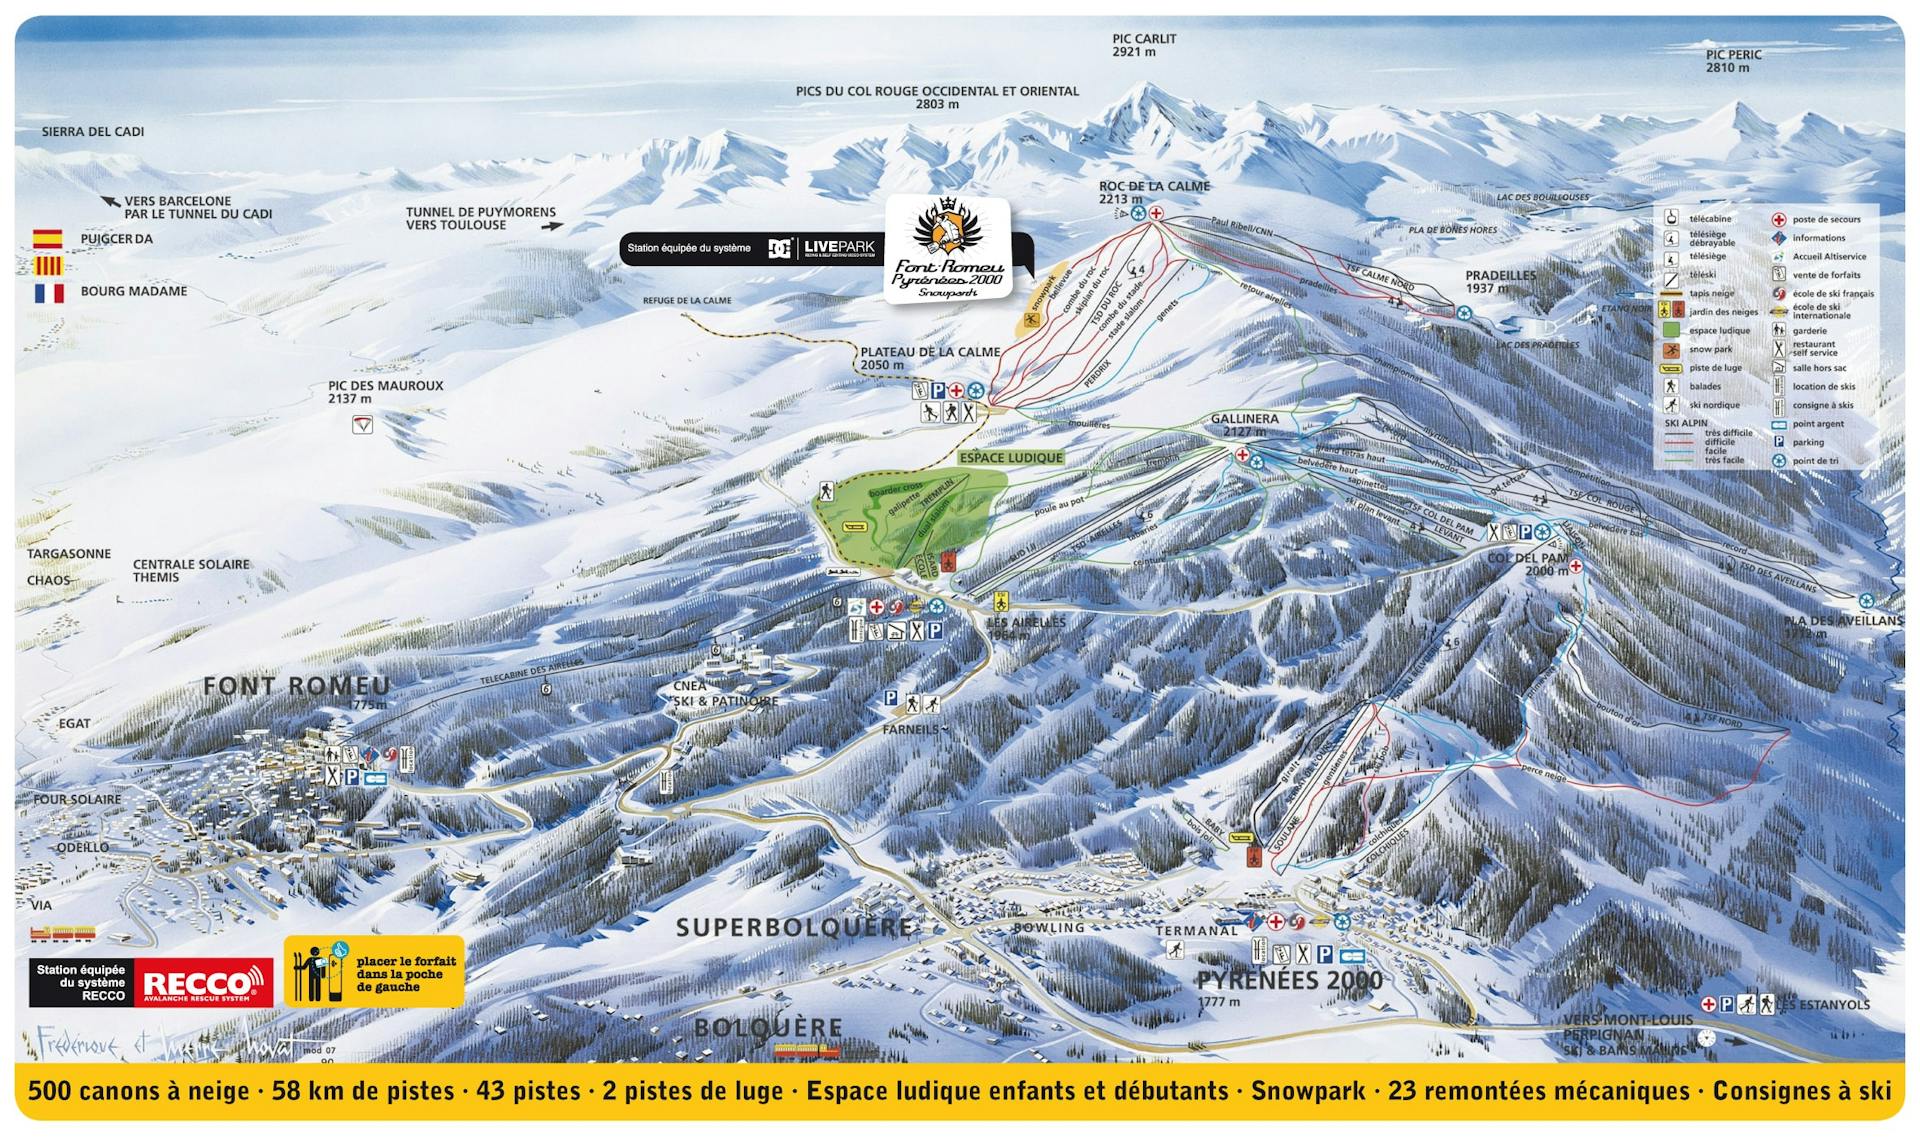 Font-Romeu (Pyrenees) ski map